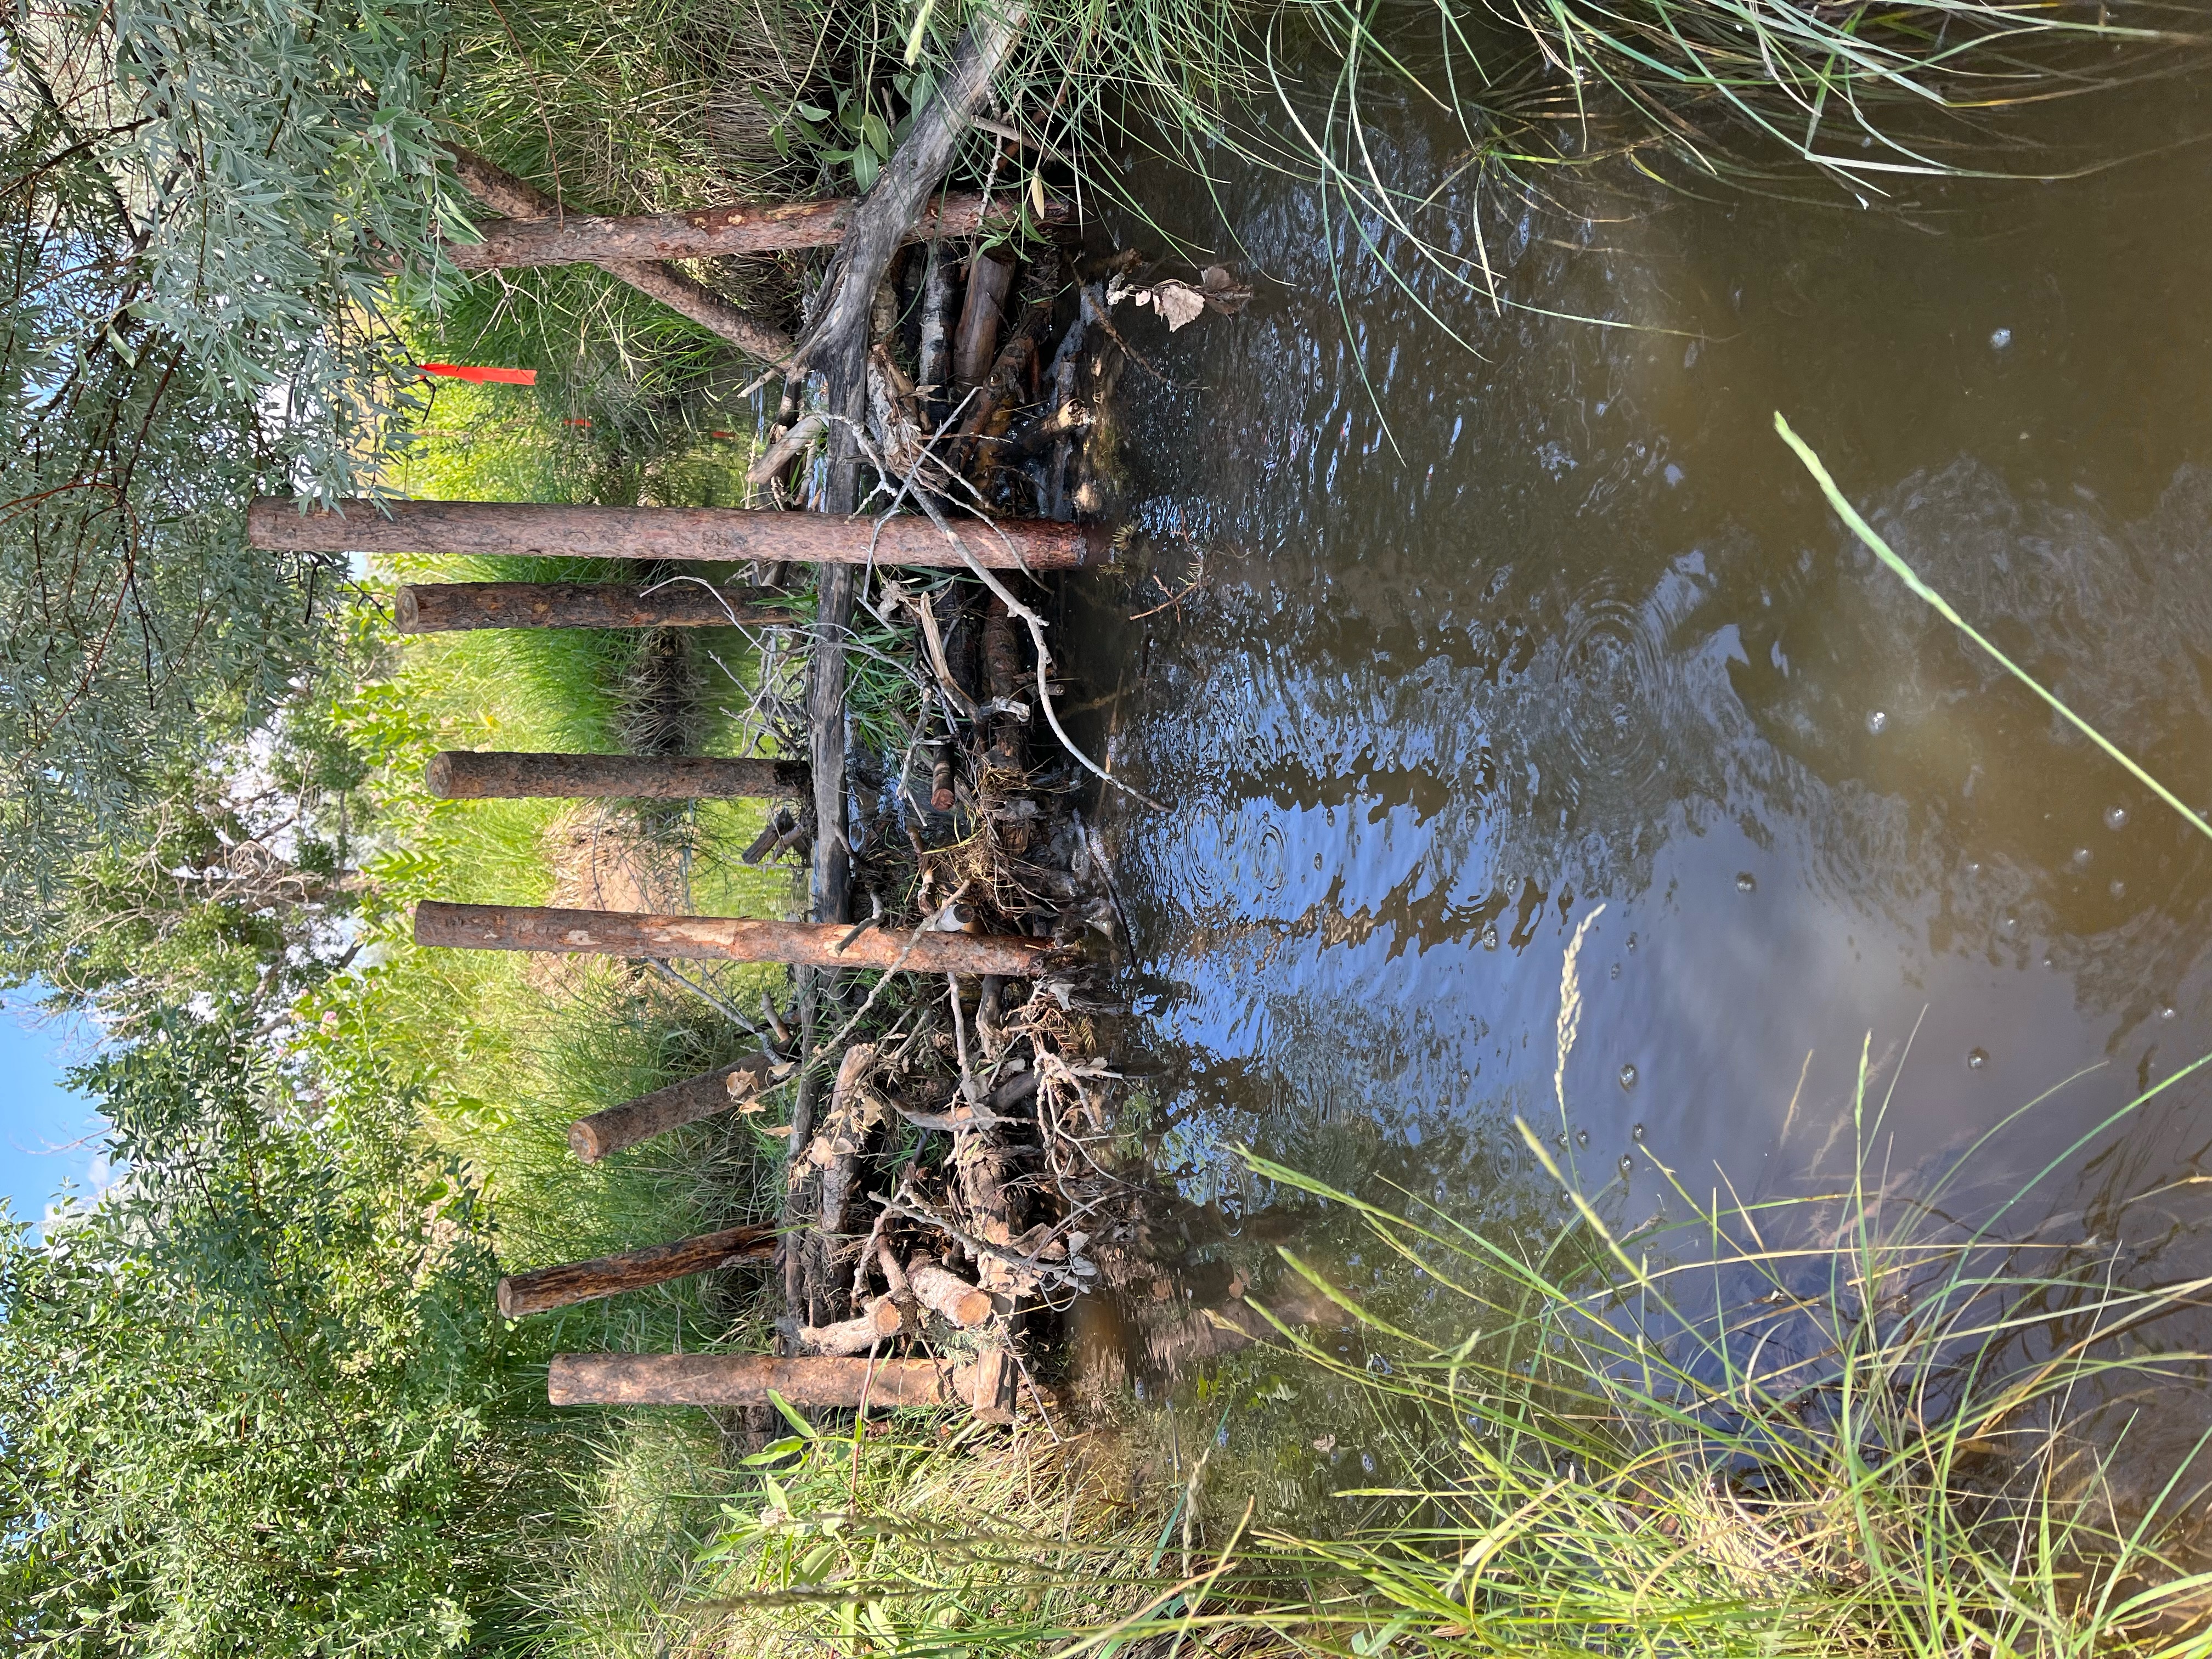 Project on Muddy Creek